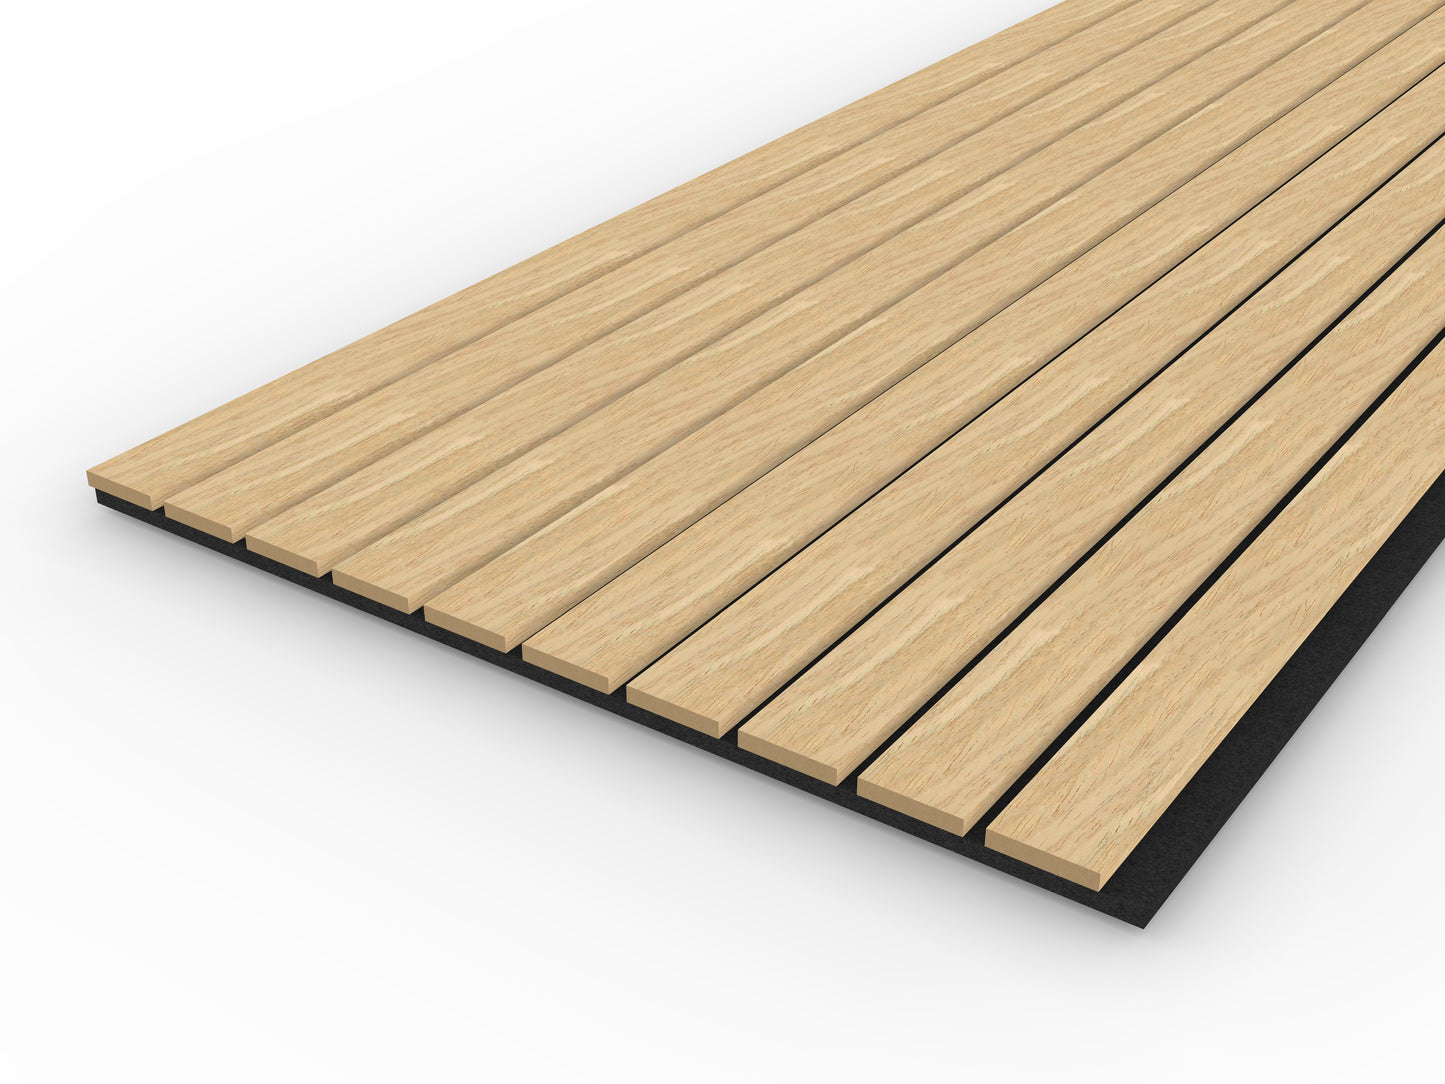 Oak Acoustic Wood Wall Panel Wide Slat Series 2 Sample